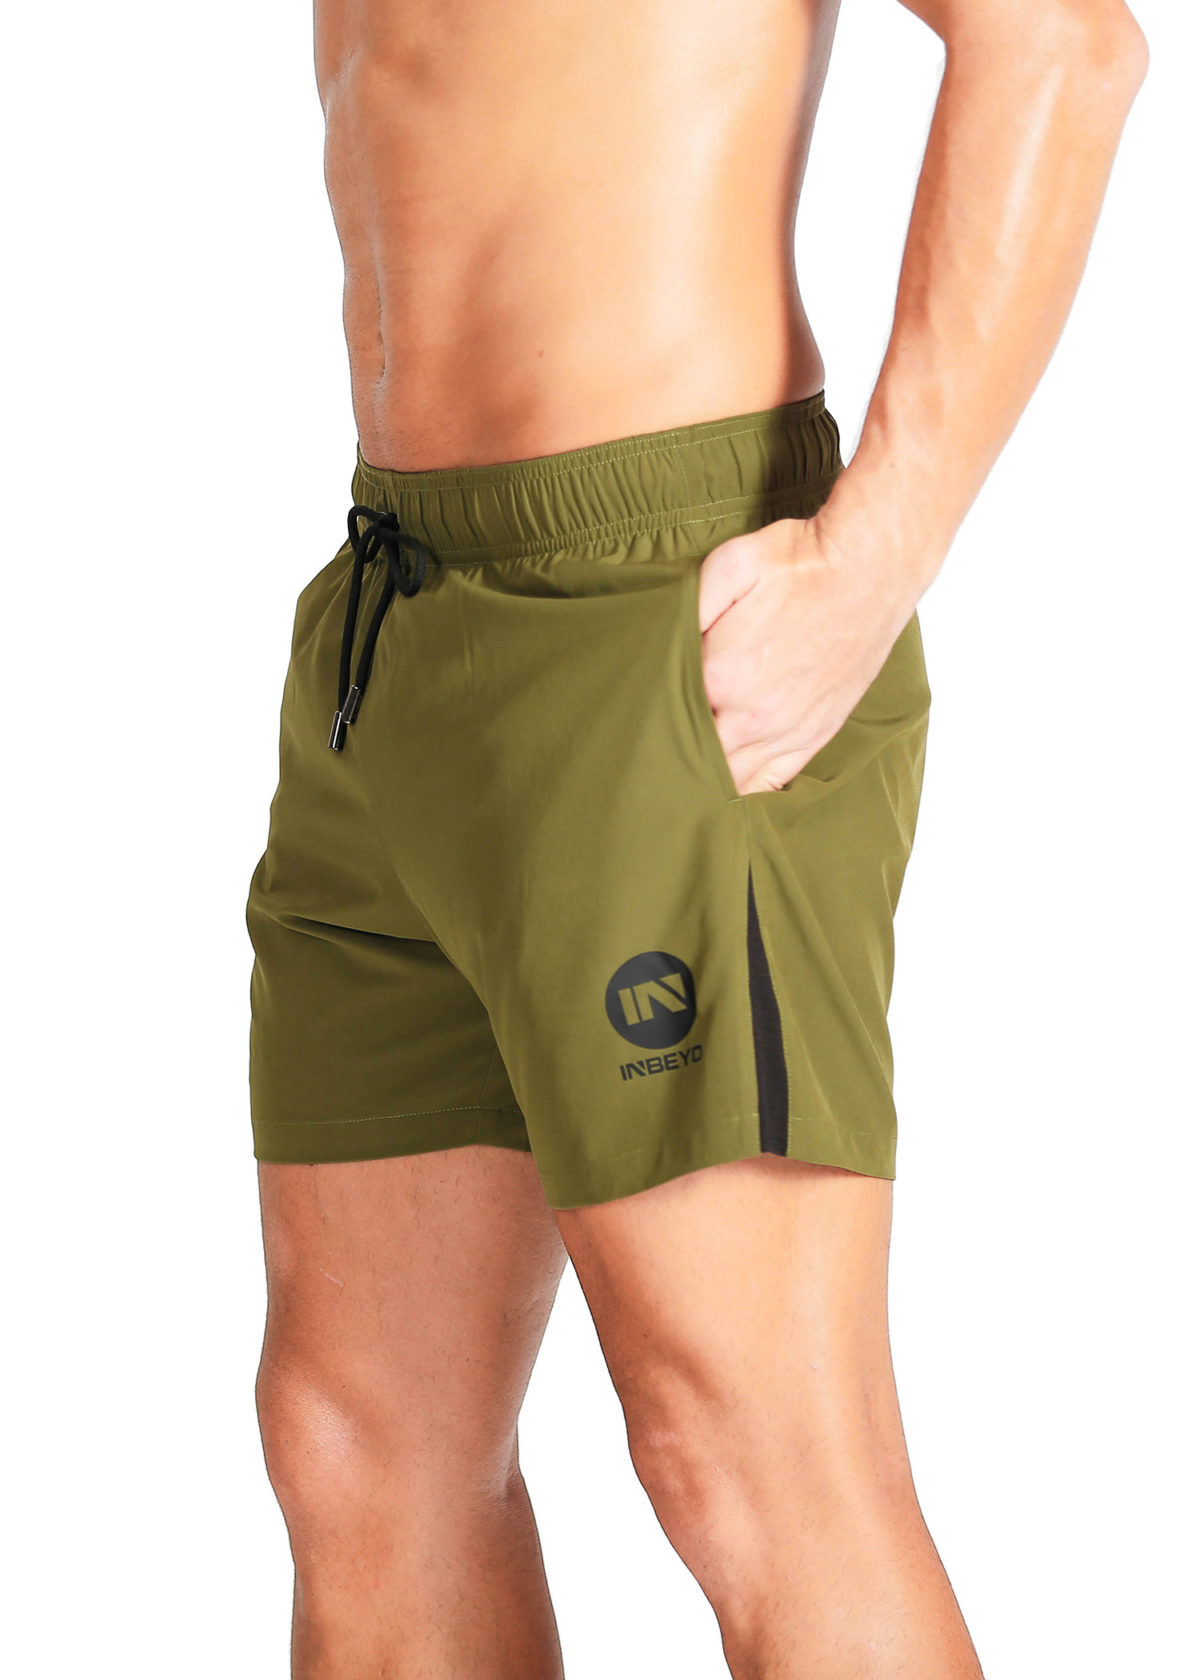 Green leisure sport shorts – www.inbeyo.com